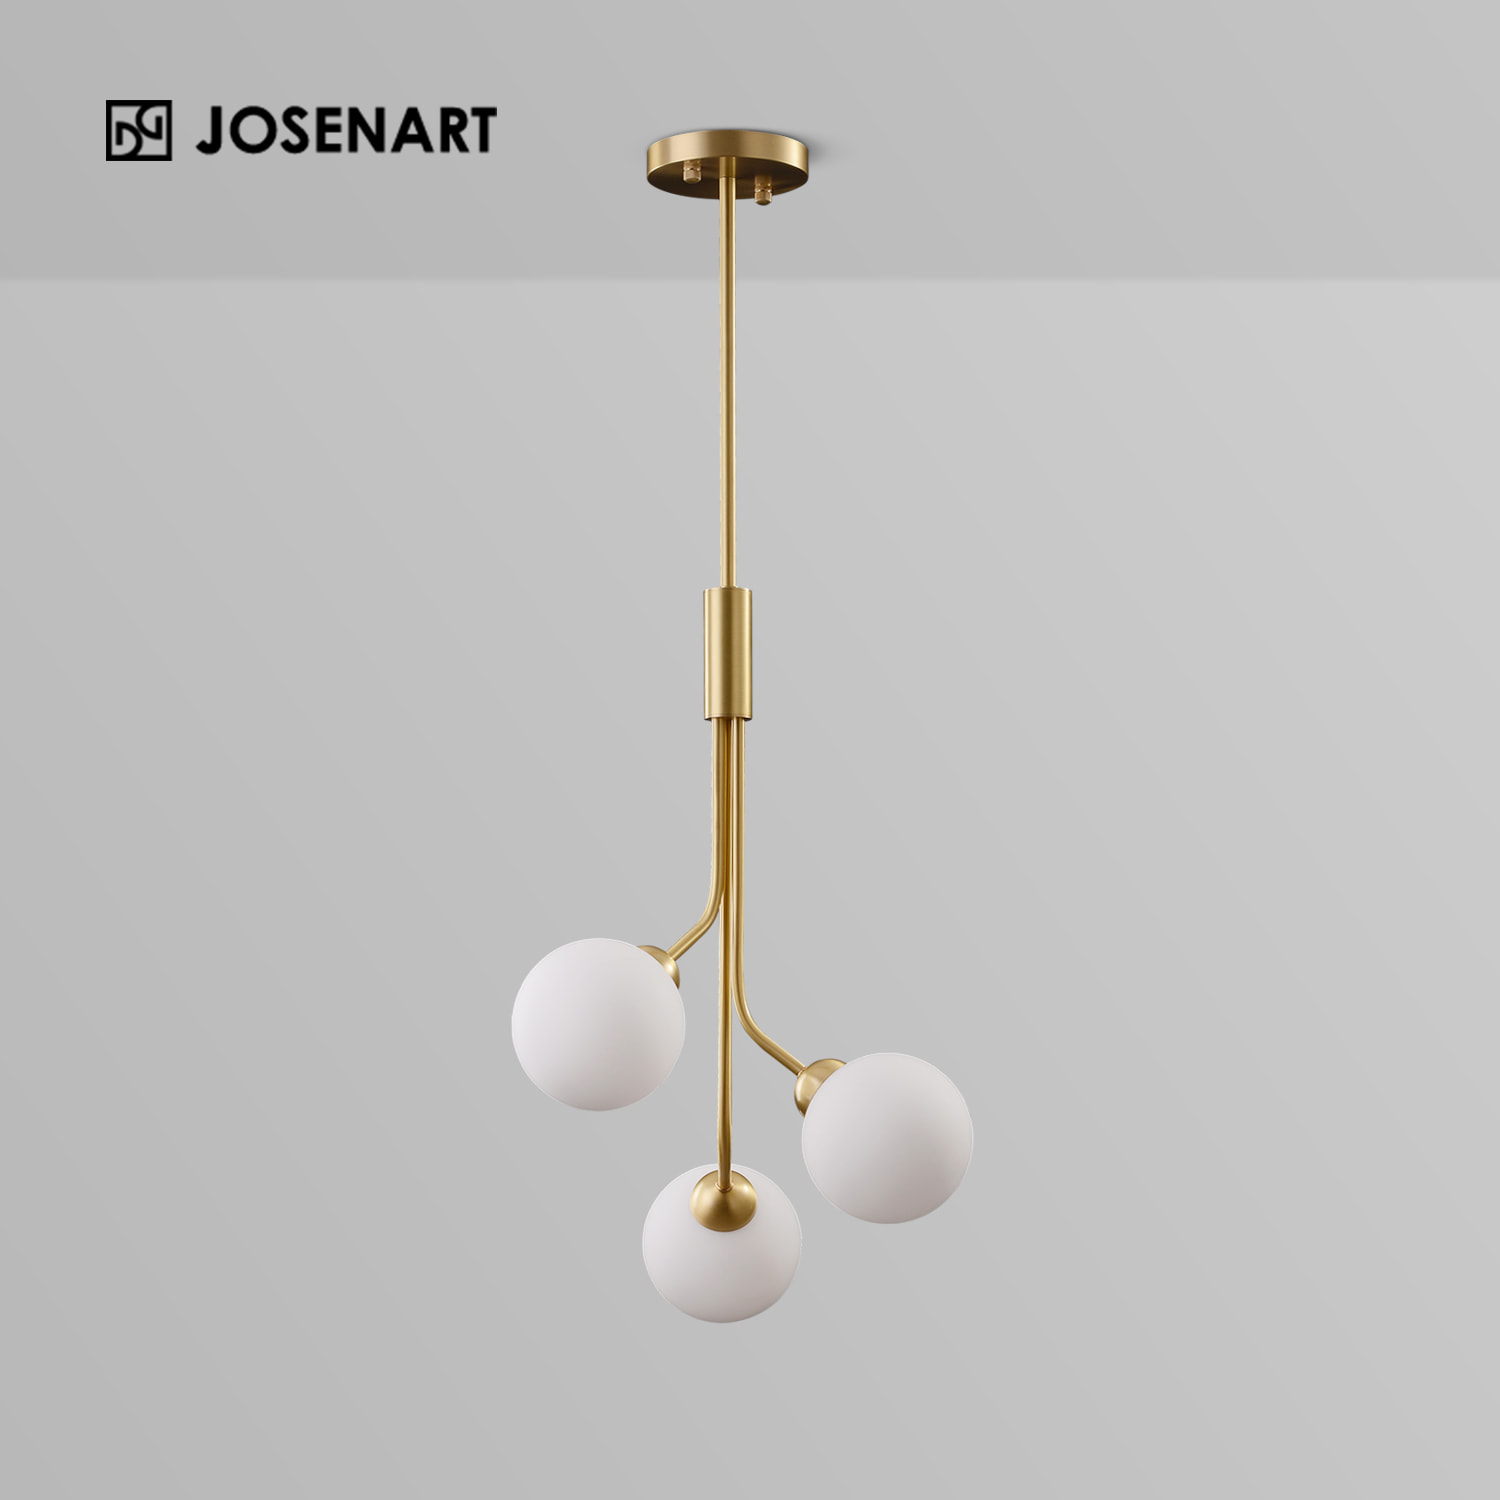  Contemporary Satin Brass & Glass Globe Pendant  JOSENART Josenart